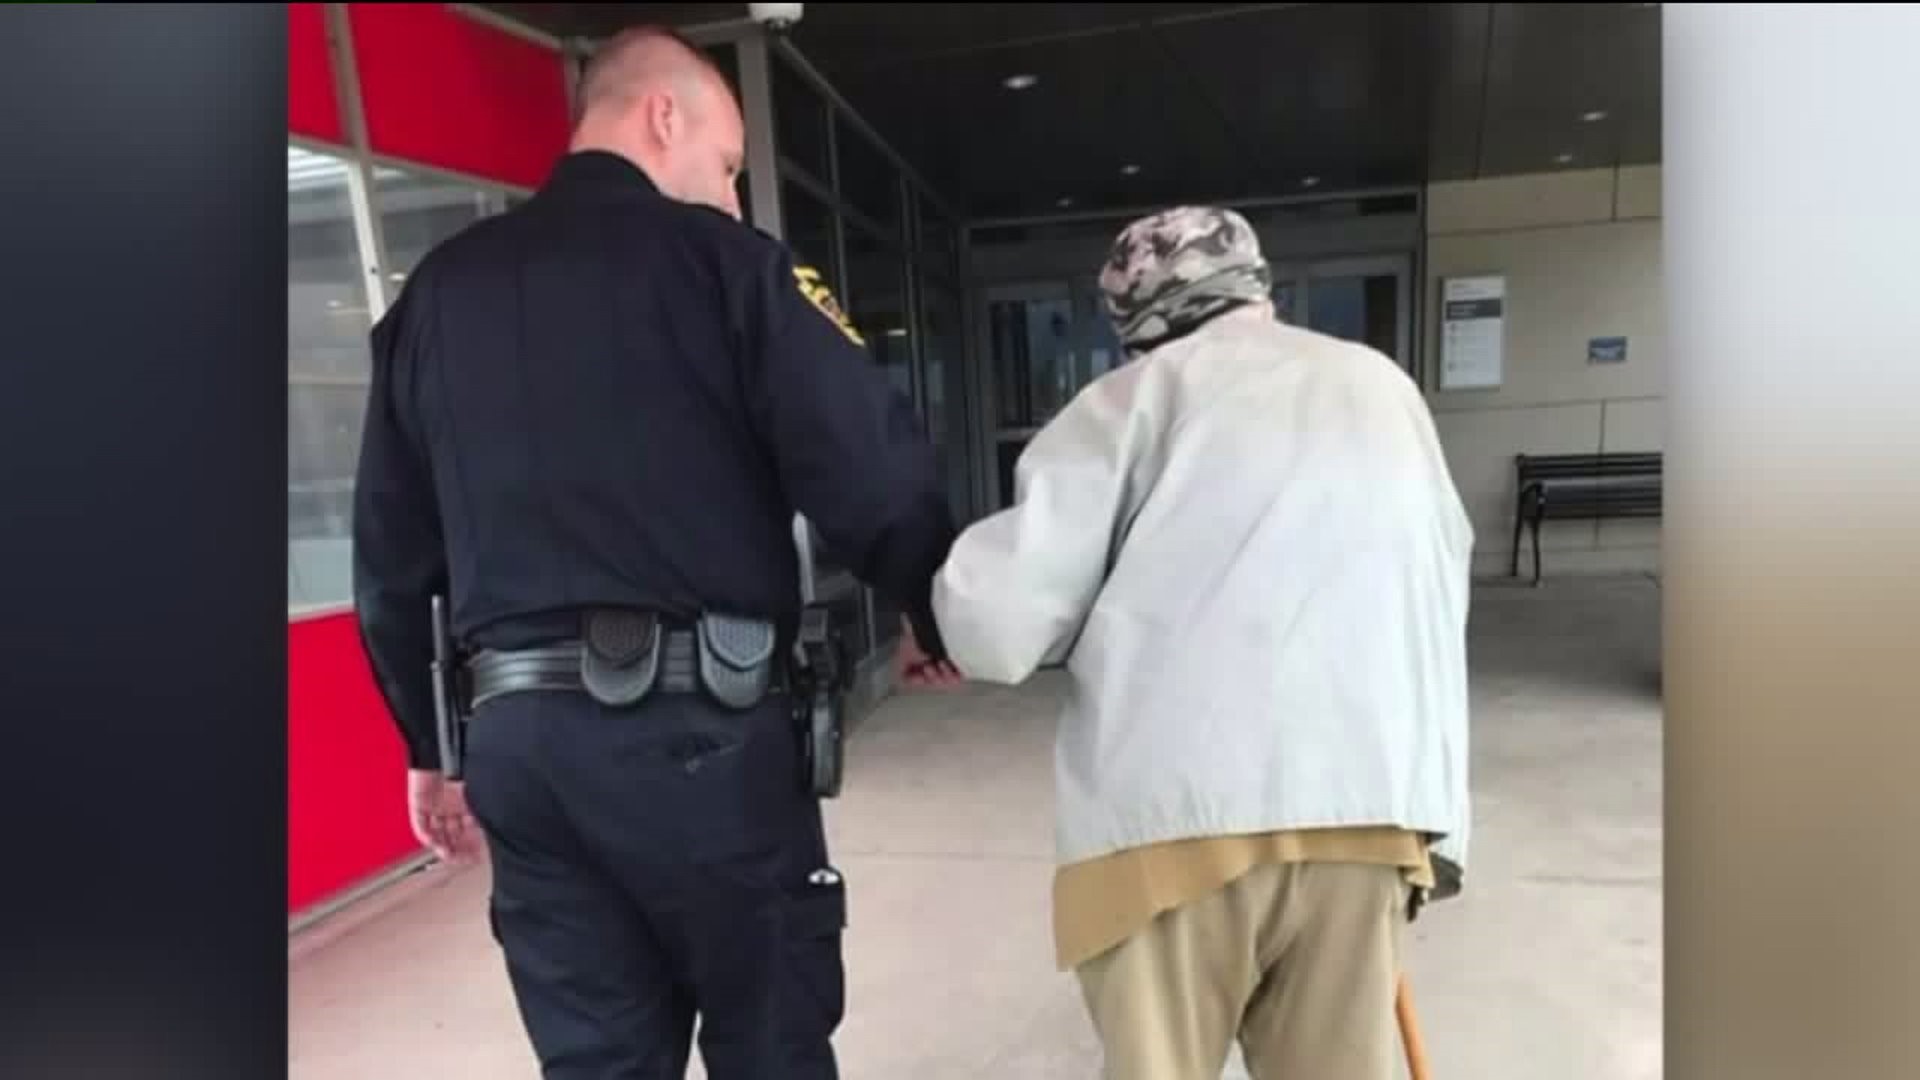 Officer`s Kindness Caught on Camera